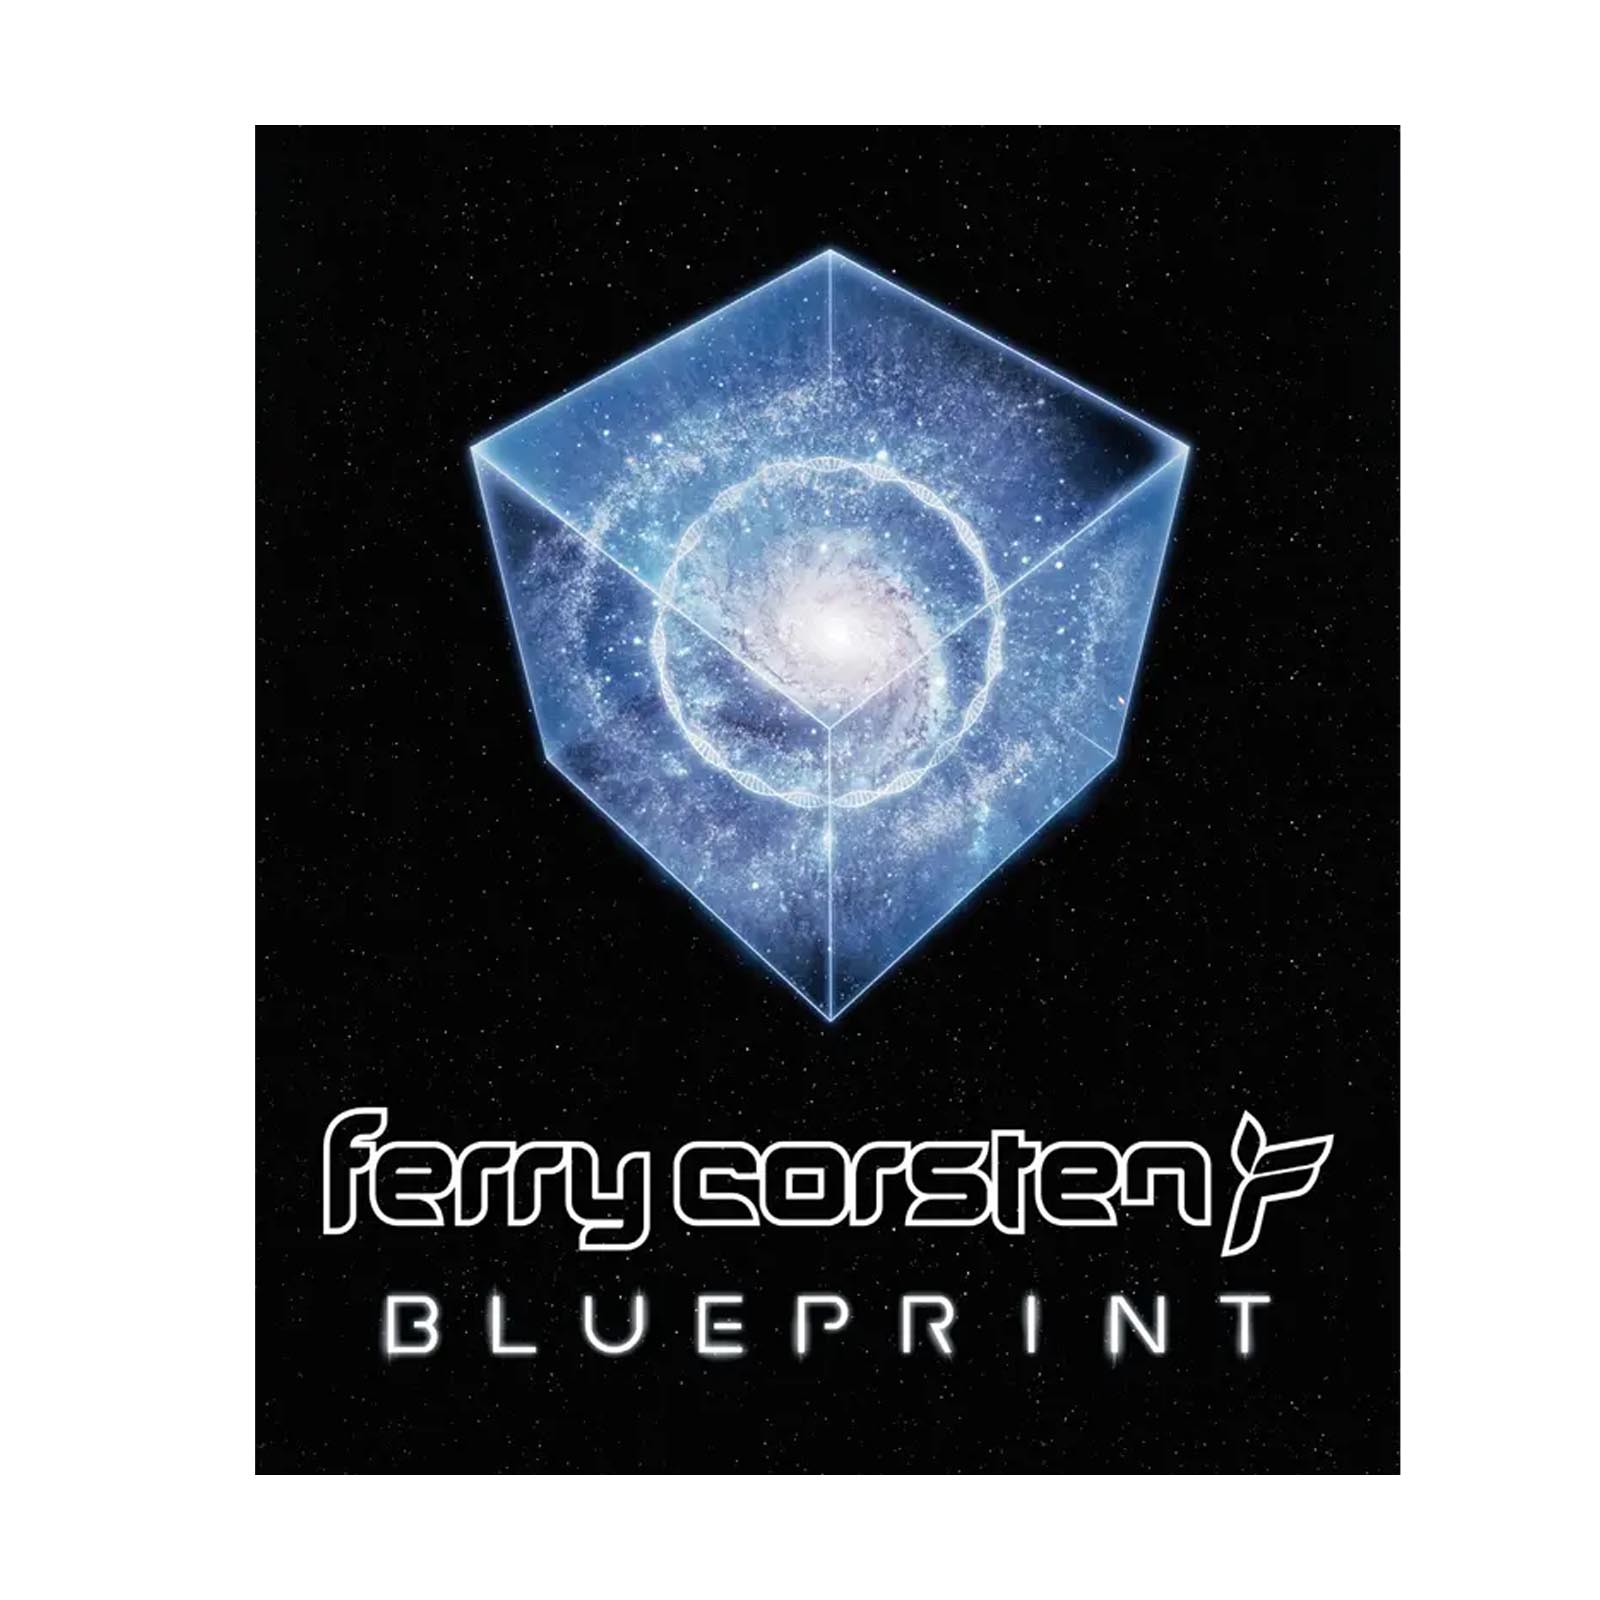 Ferry Corsten – Blueprint